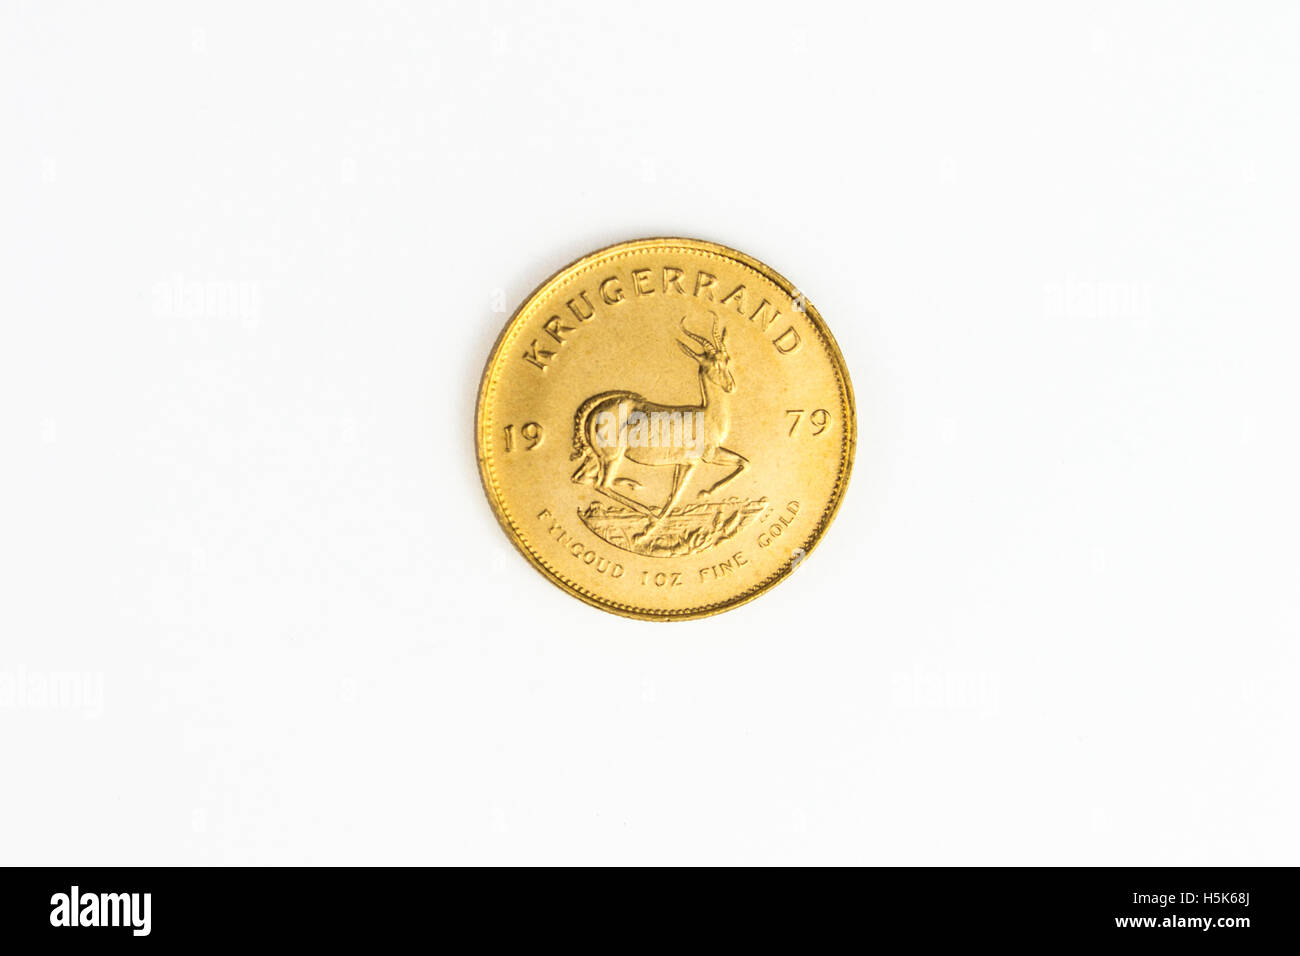 1 OZ gold coin - Krugerrand gold coin Stock Photo - Alamy